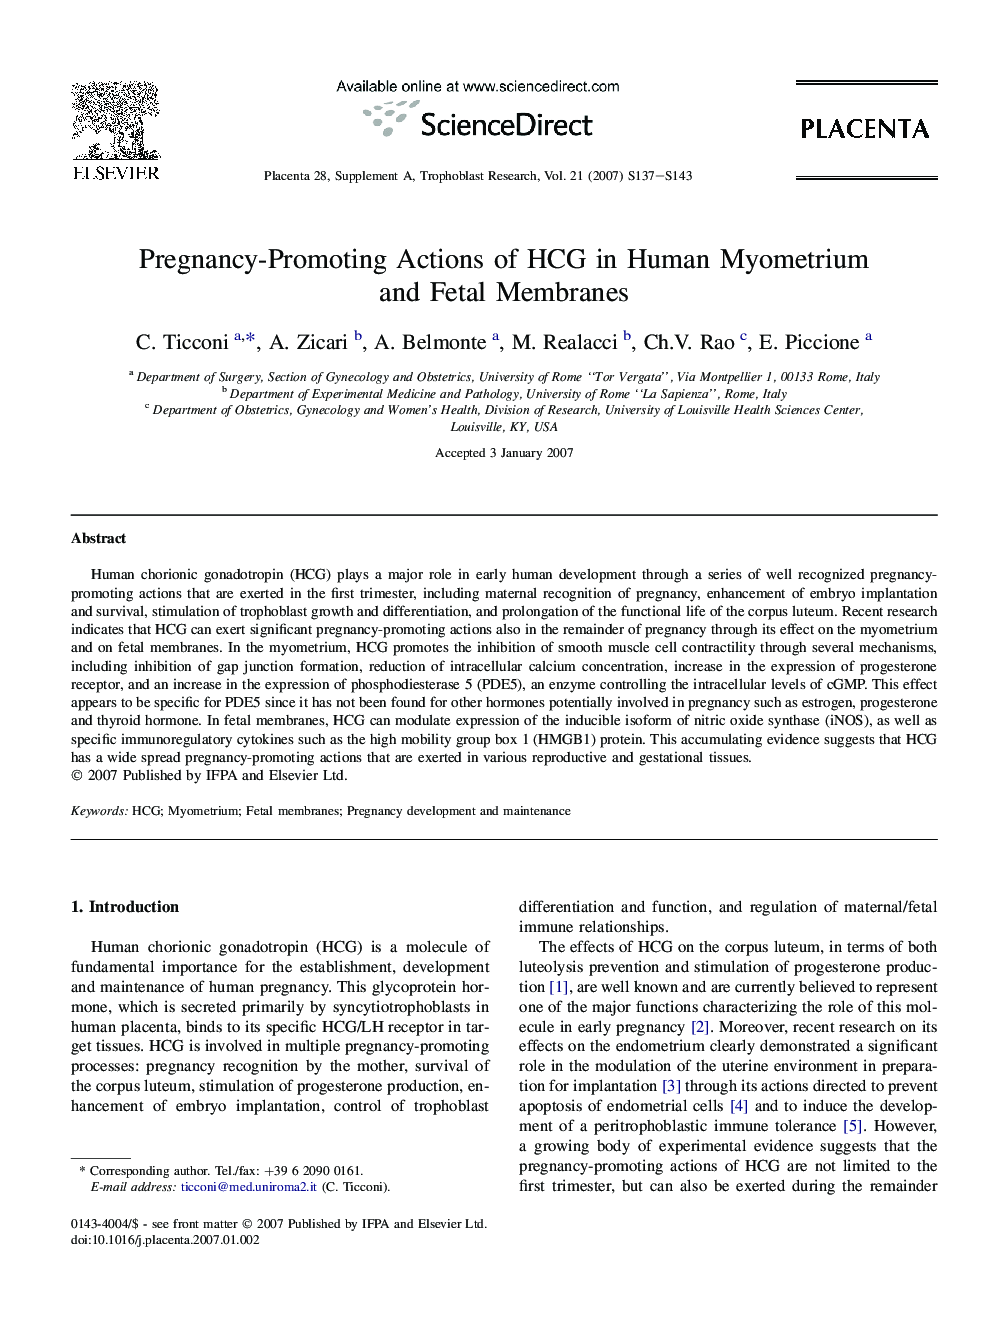 Pregnancy-Promoting Actions of HCG in Human Myometrium and Fetal Membranes